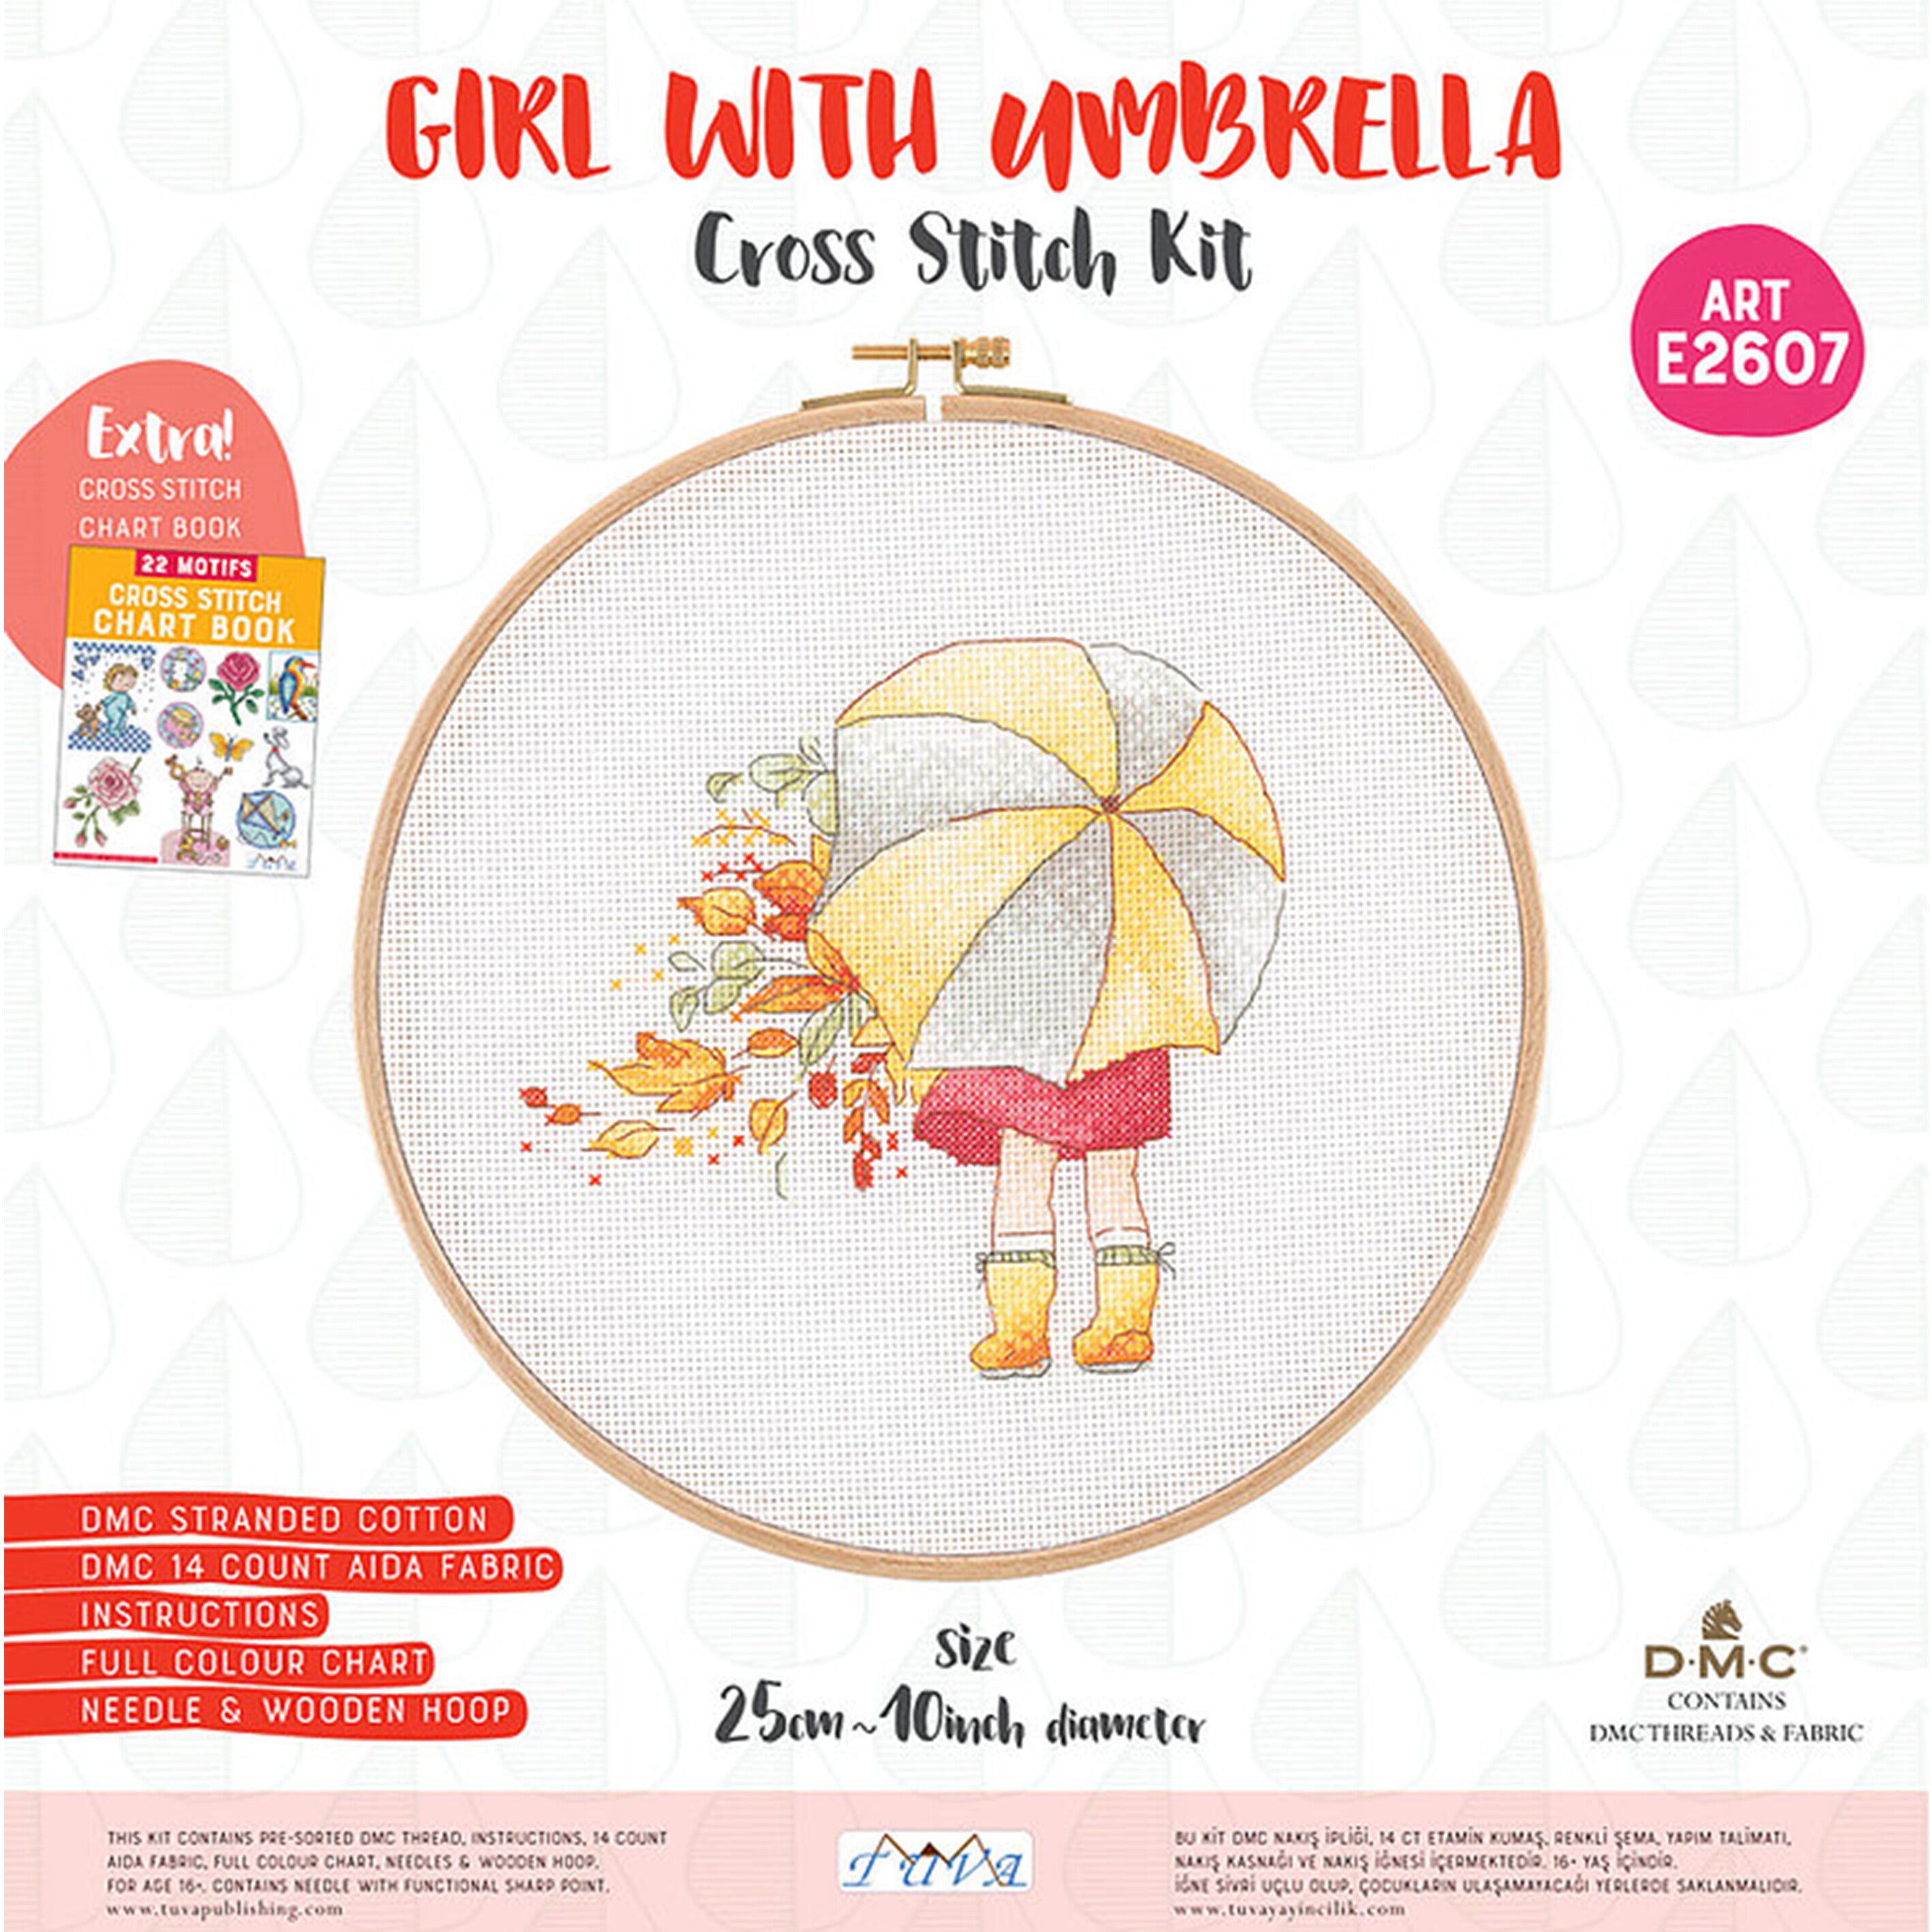 Tuva Cross Stitch Kit, Girl with Umbrella - E2607